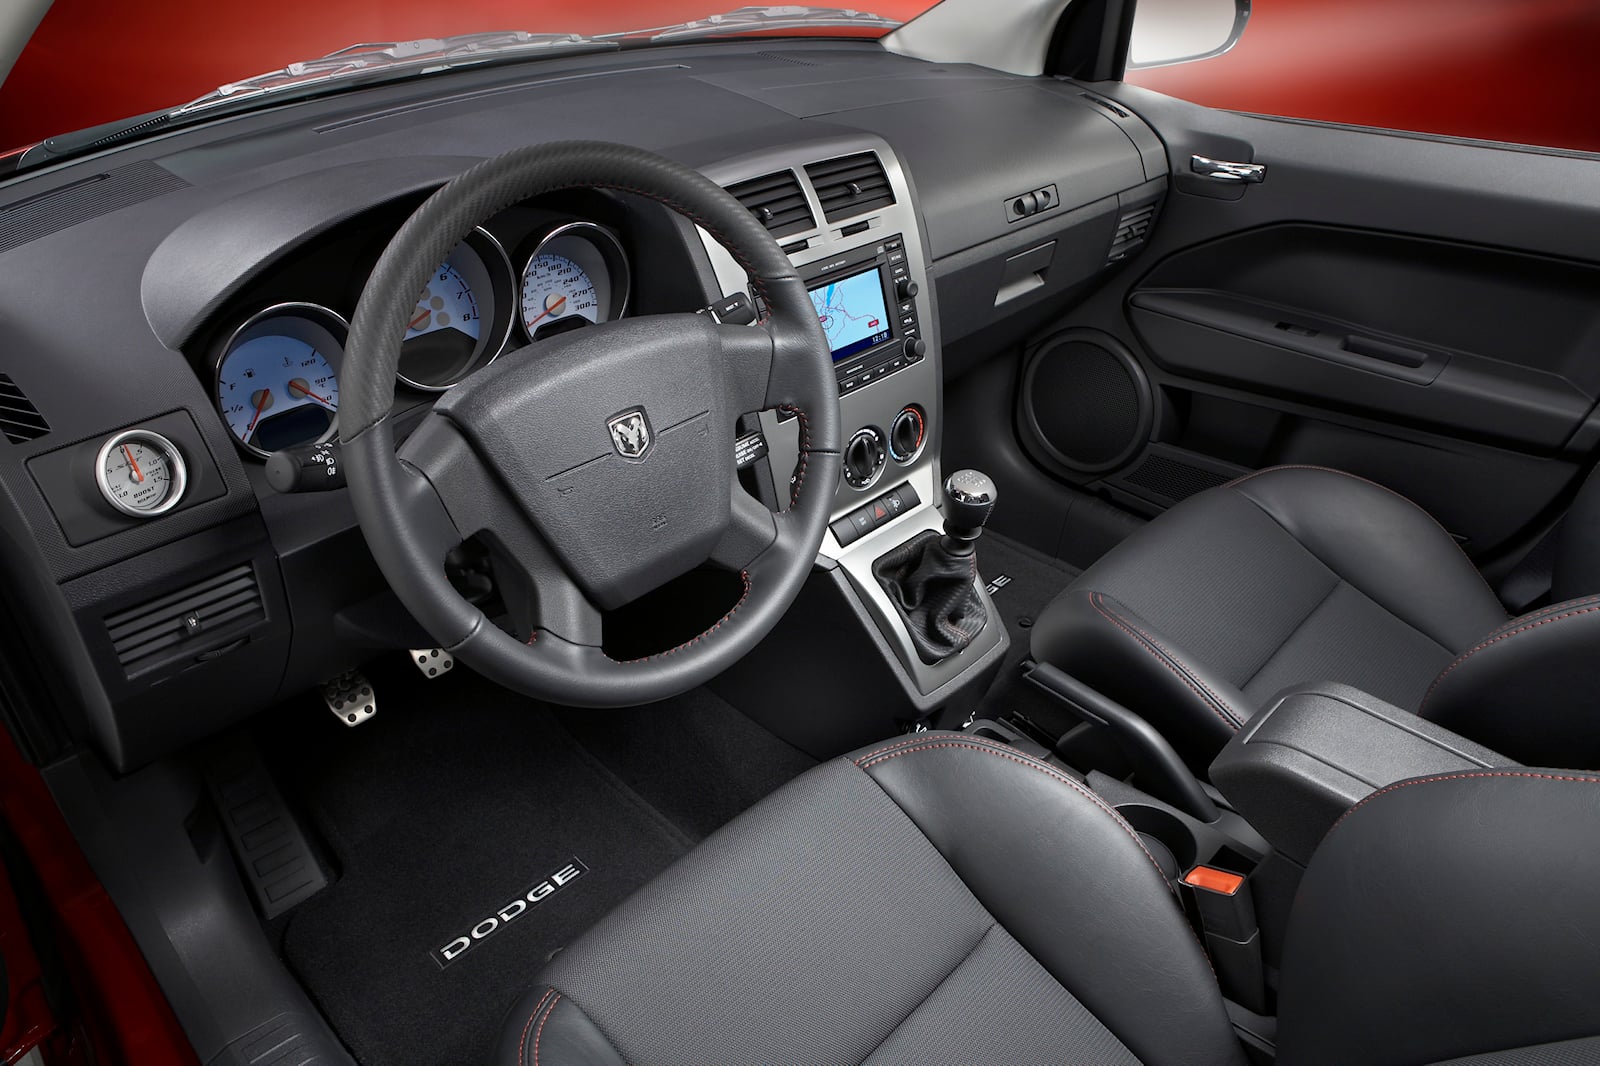 2009 Dodge Caliber SRT4 Interior Photos | CarBuzz